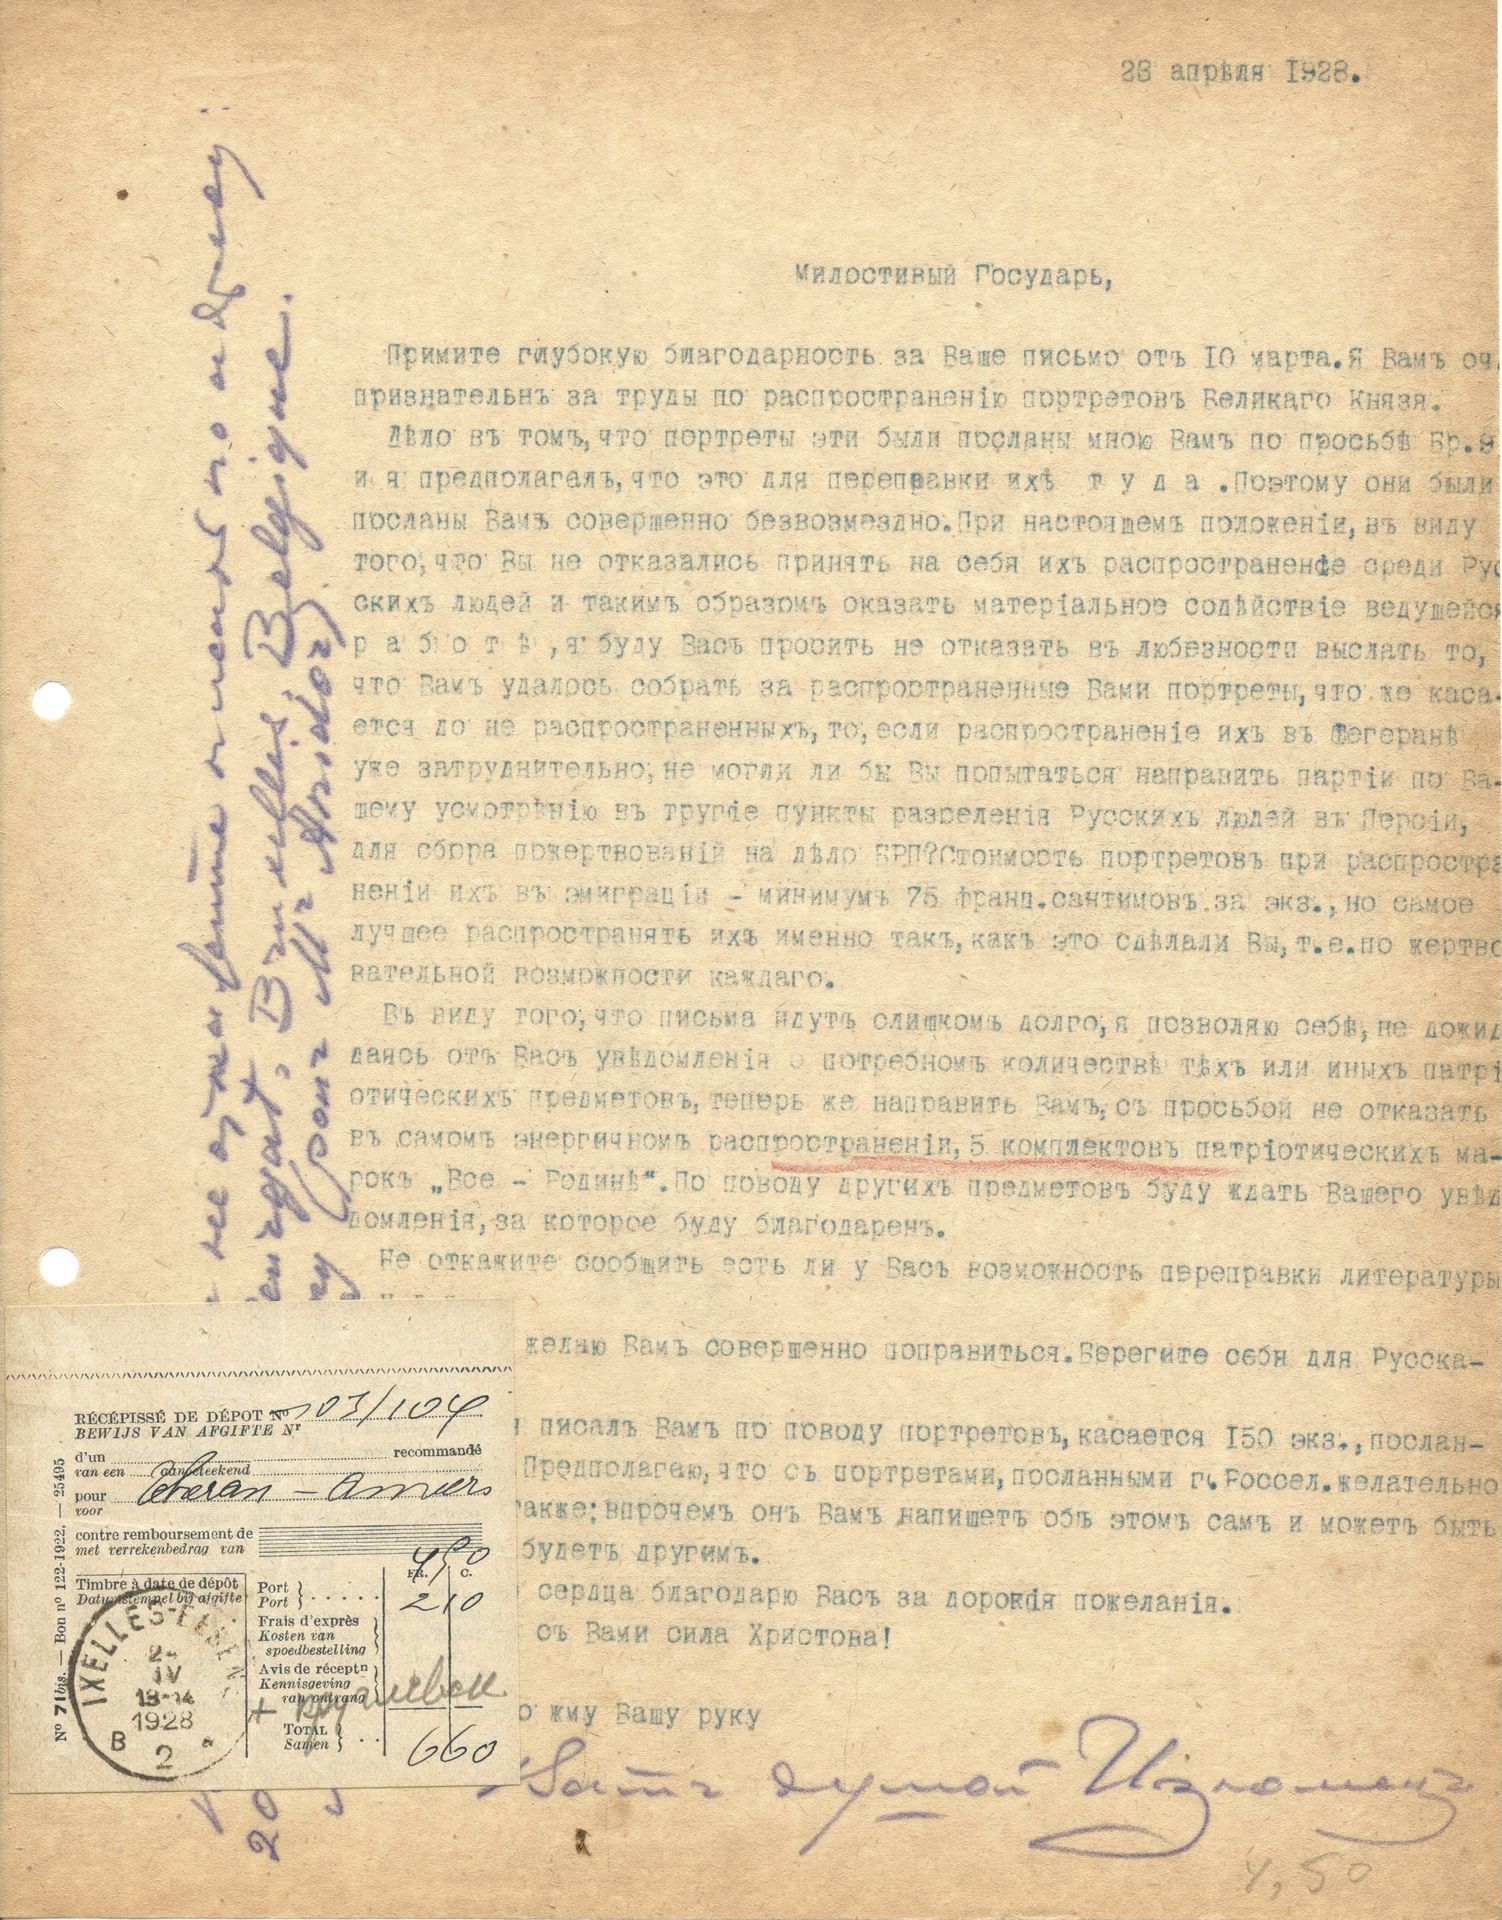 Null ARCHIVES d’Andreï BALASHOV (1899-1969)

• Correspondance avec N. Sokolov. L&hellip;